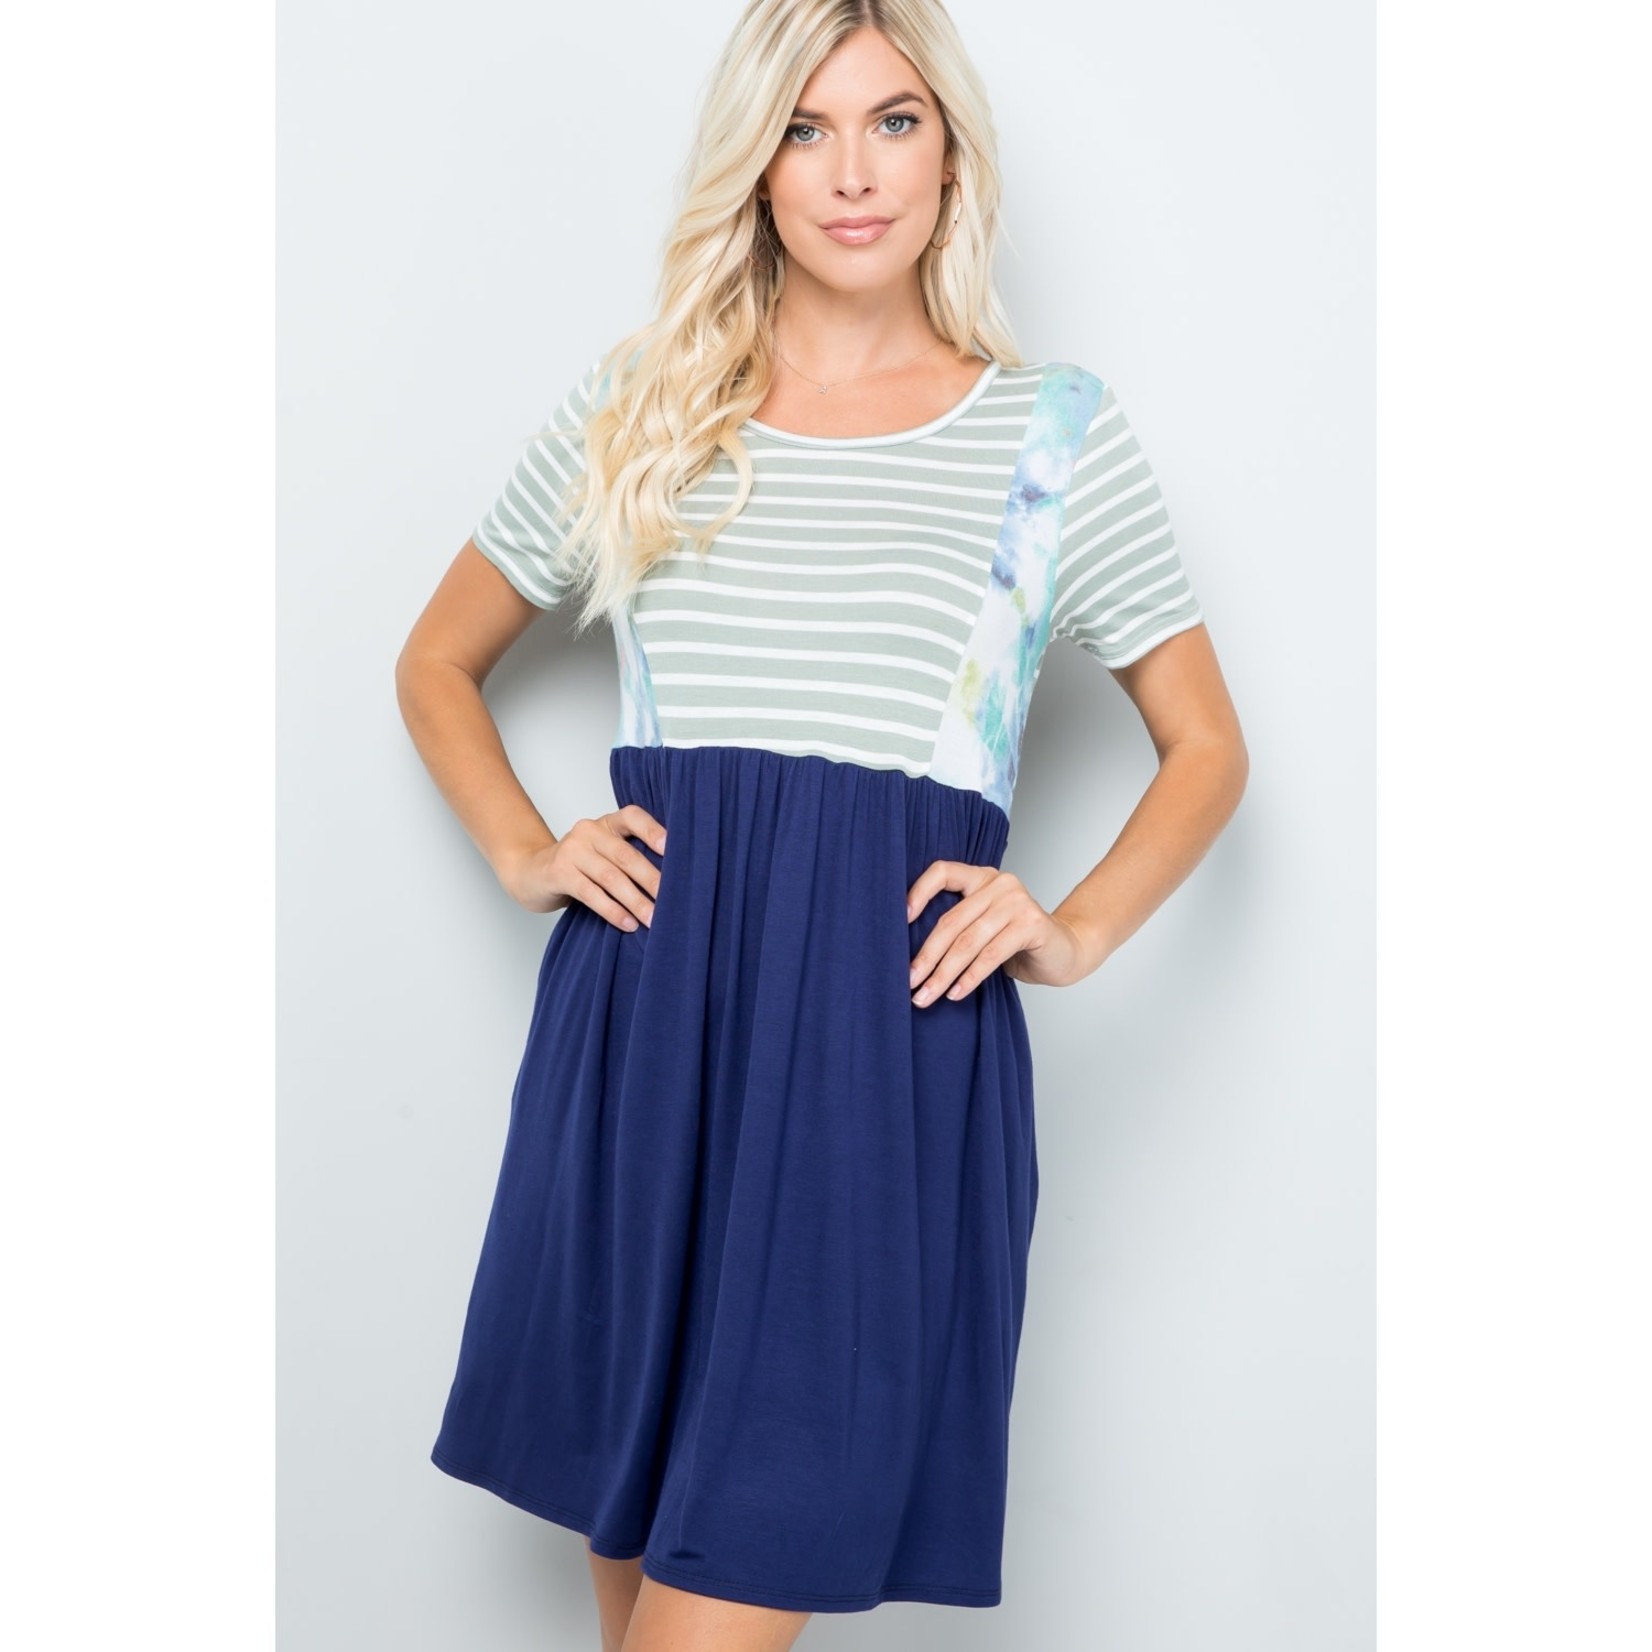 Celeste Clothing Navy Dress with Stripes